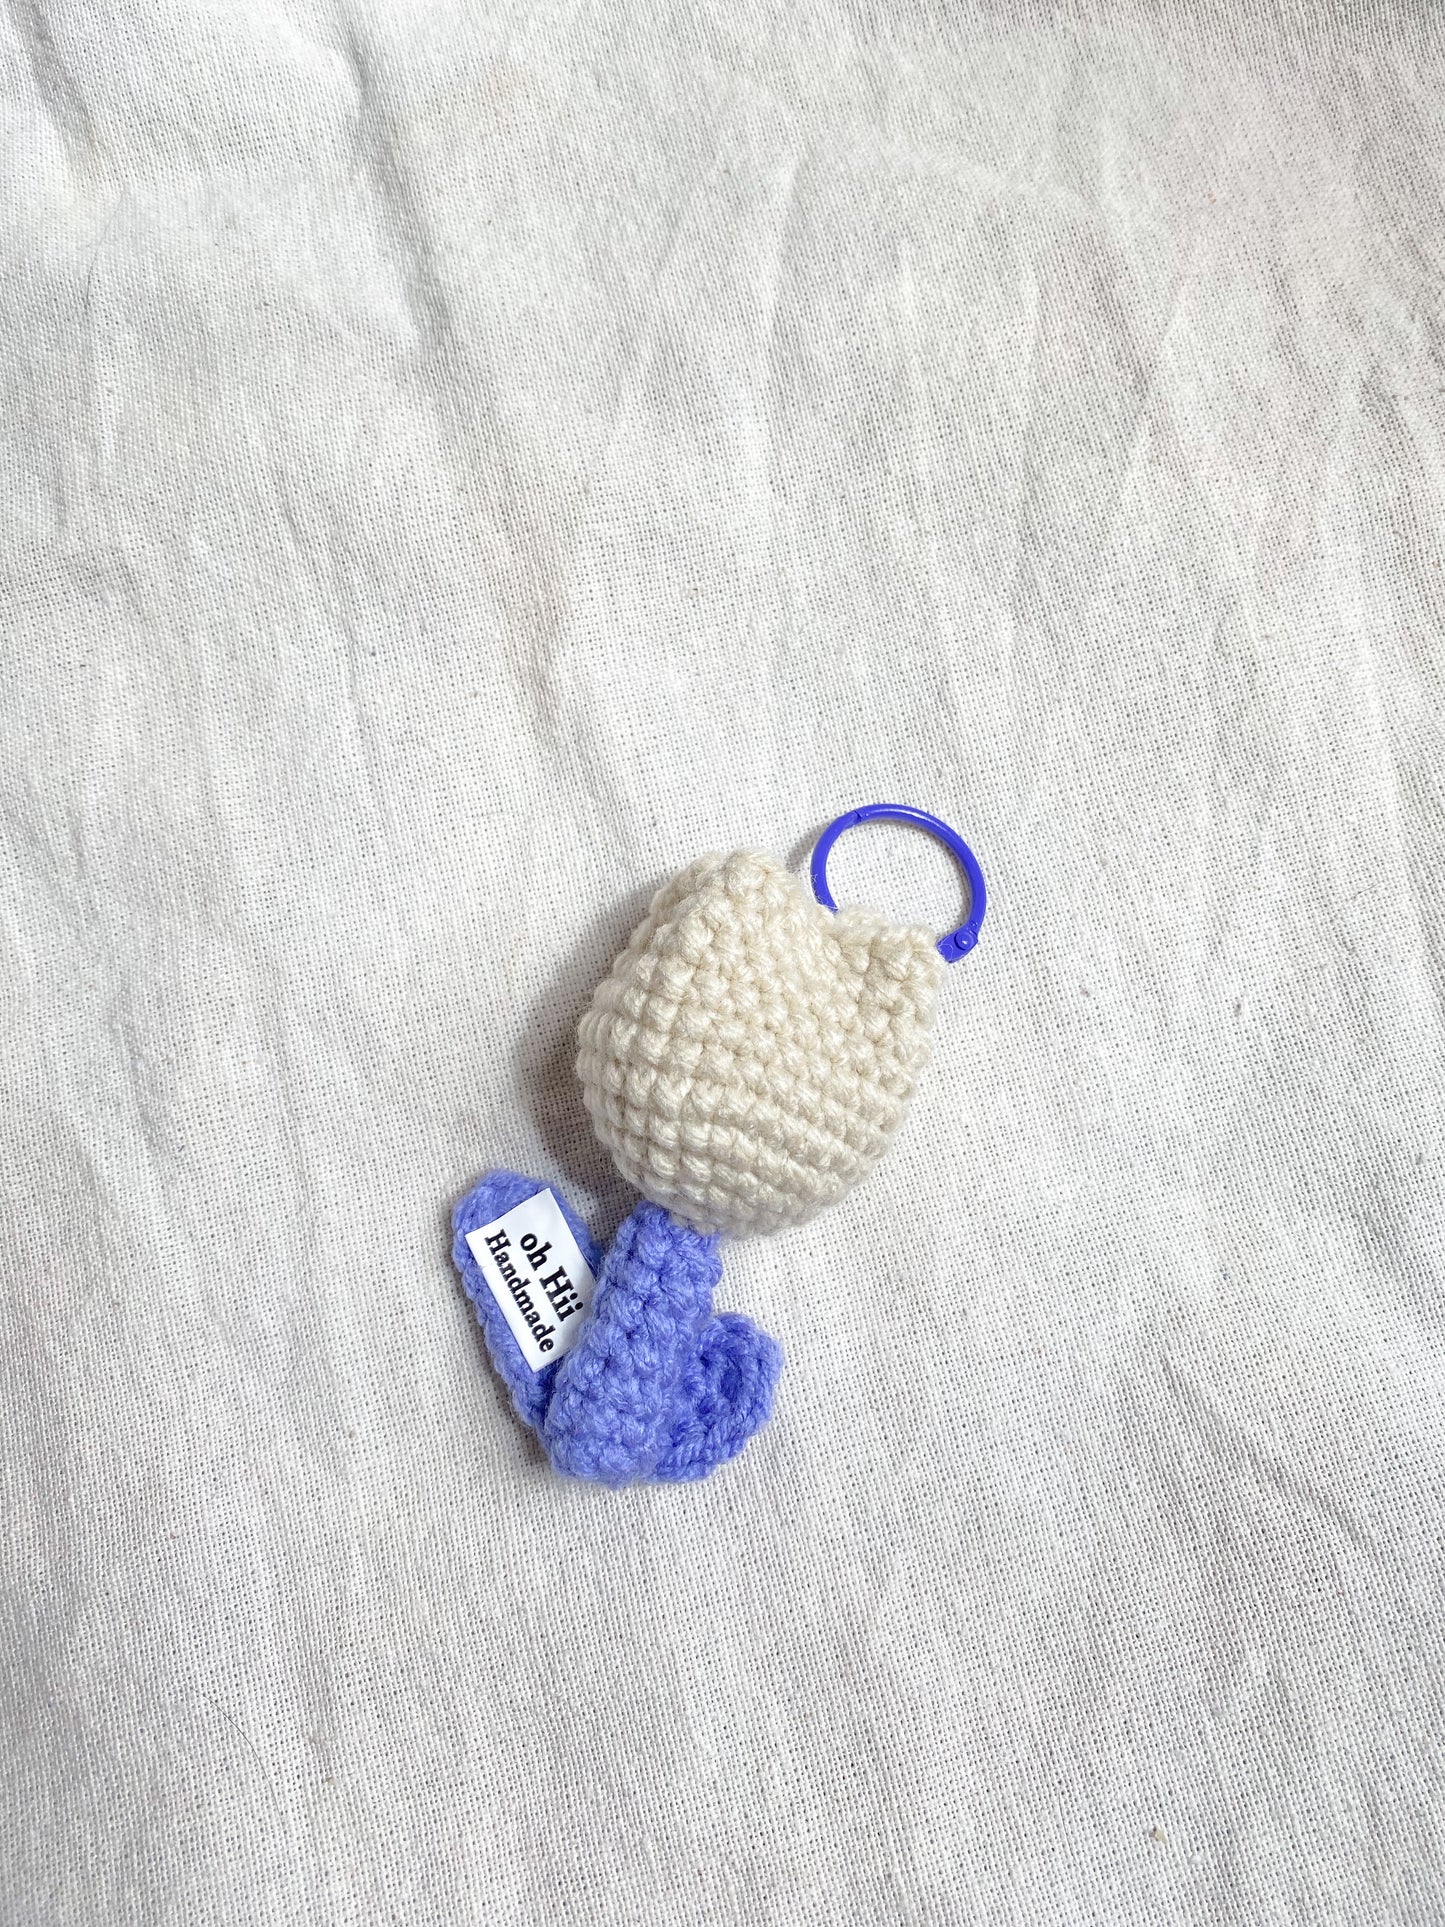 Crochet Keychains – oh Hii handmade